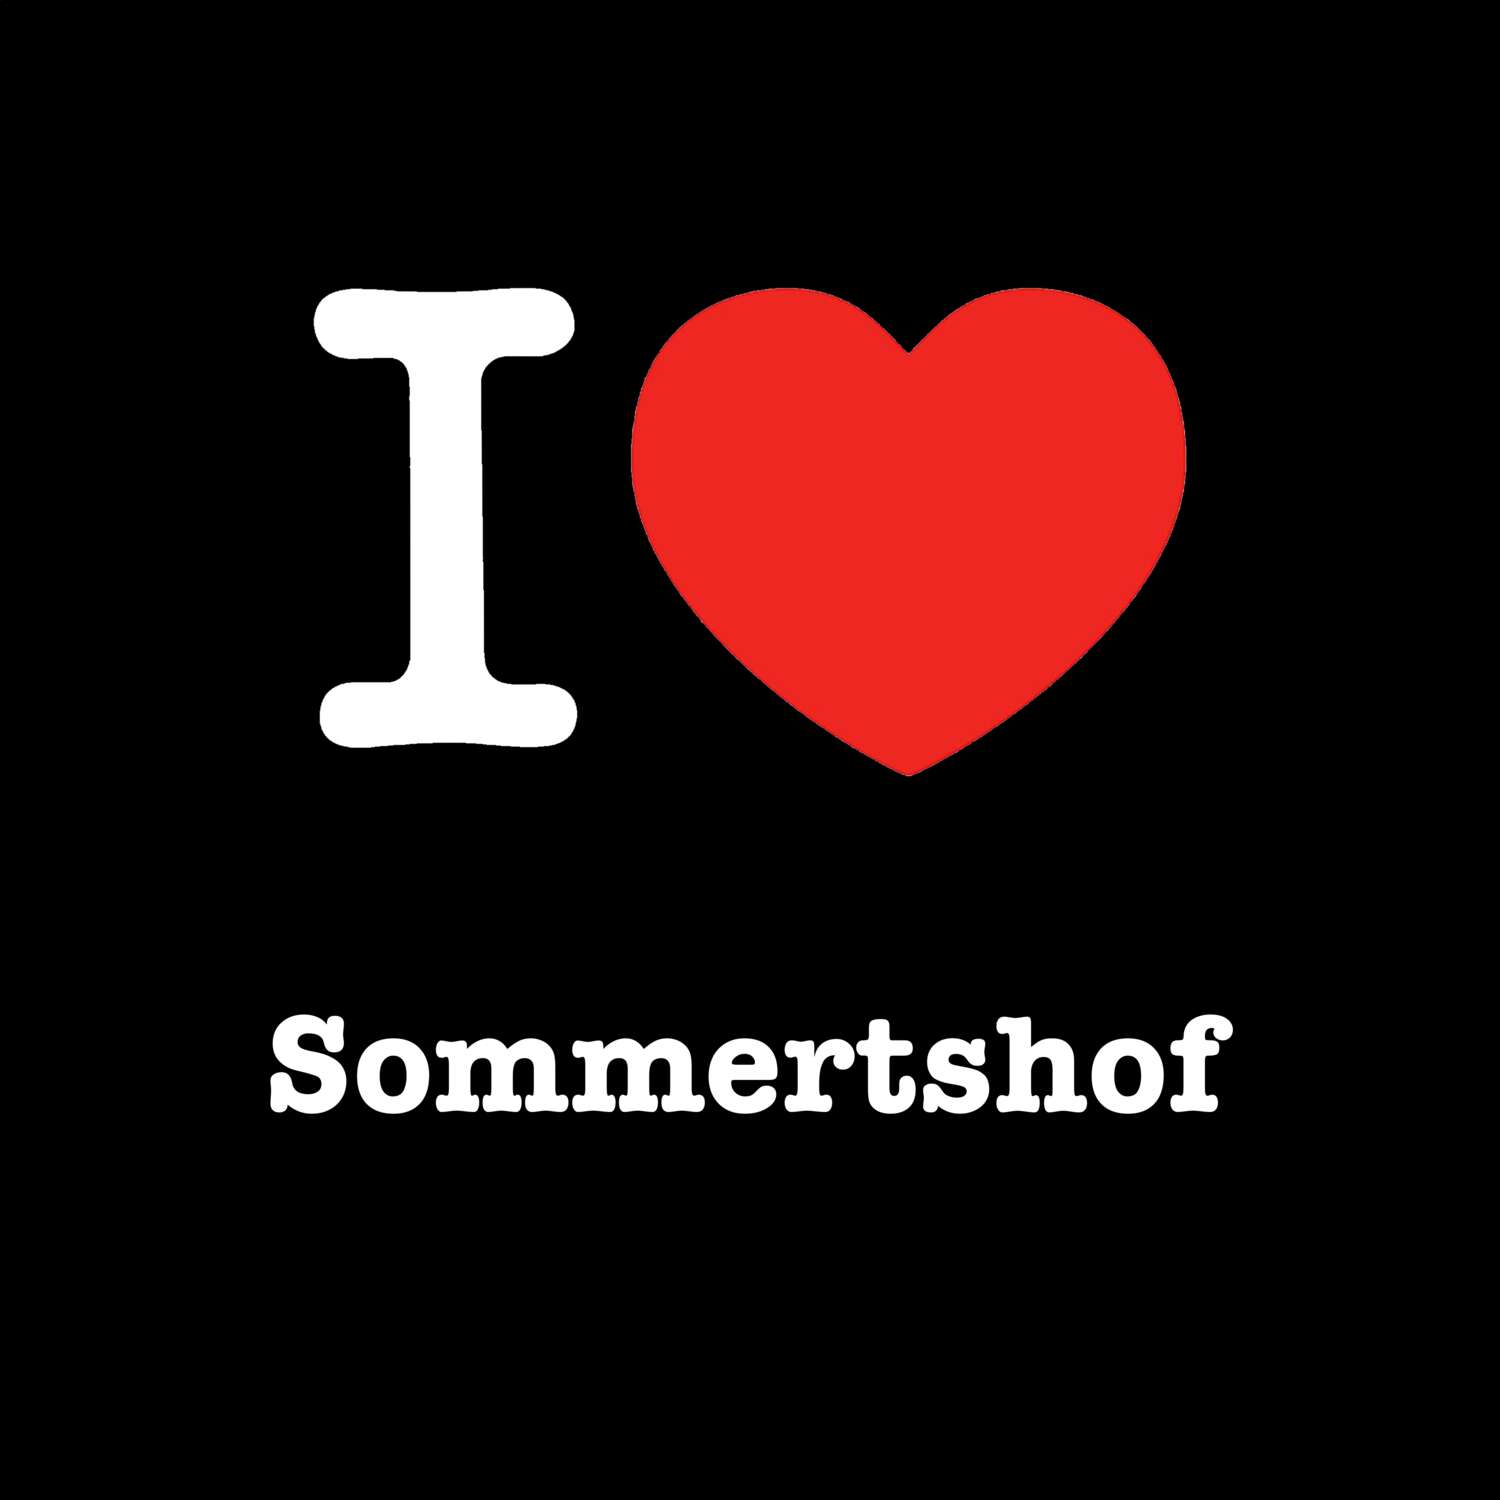 Sommertshof T-Shirt »I love«